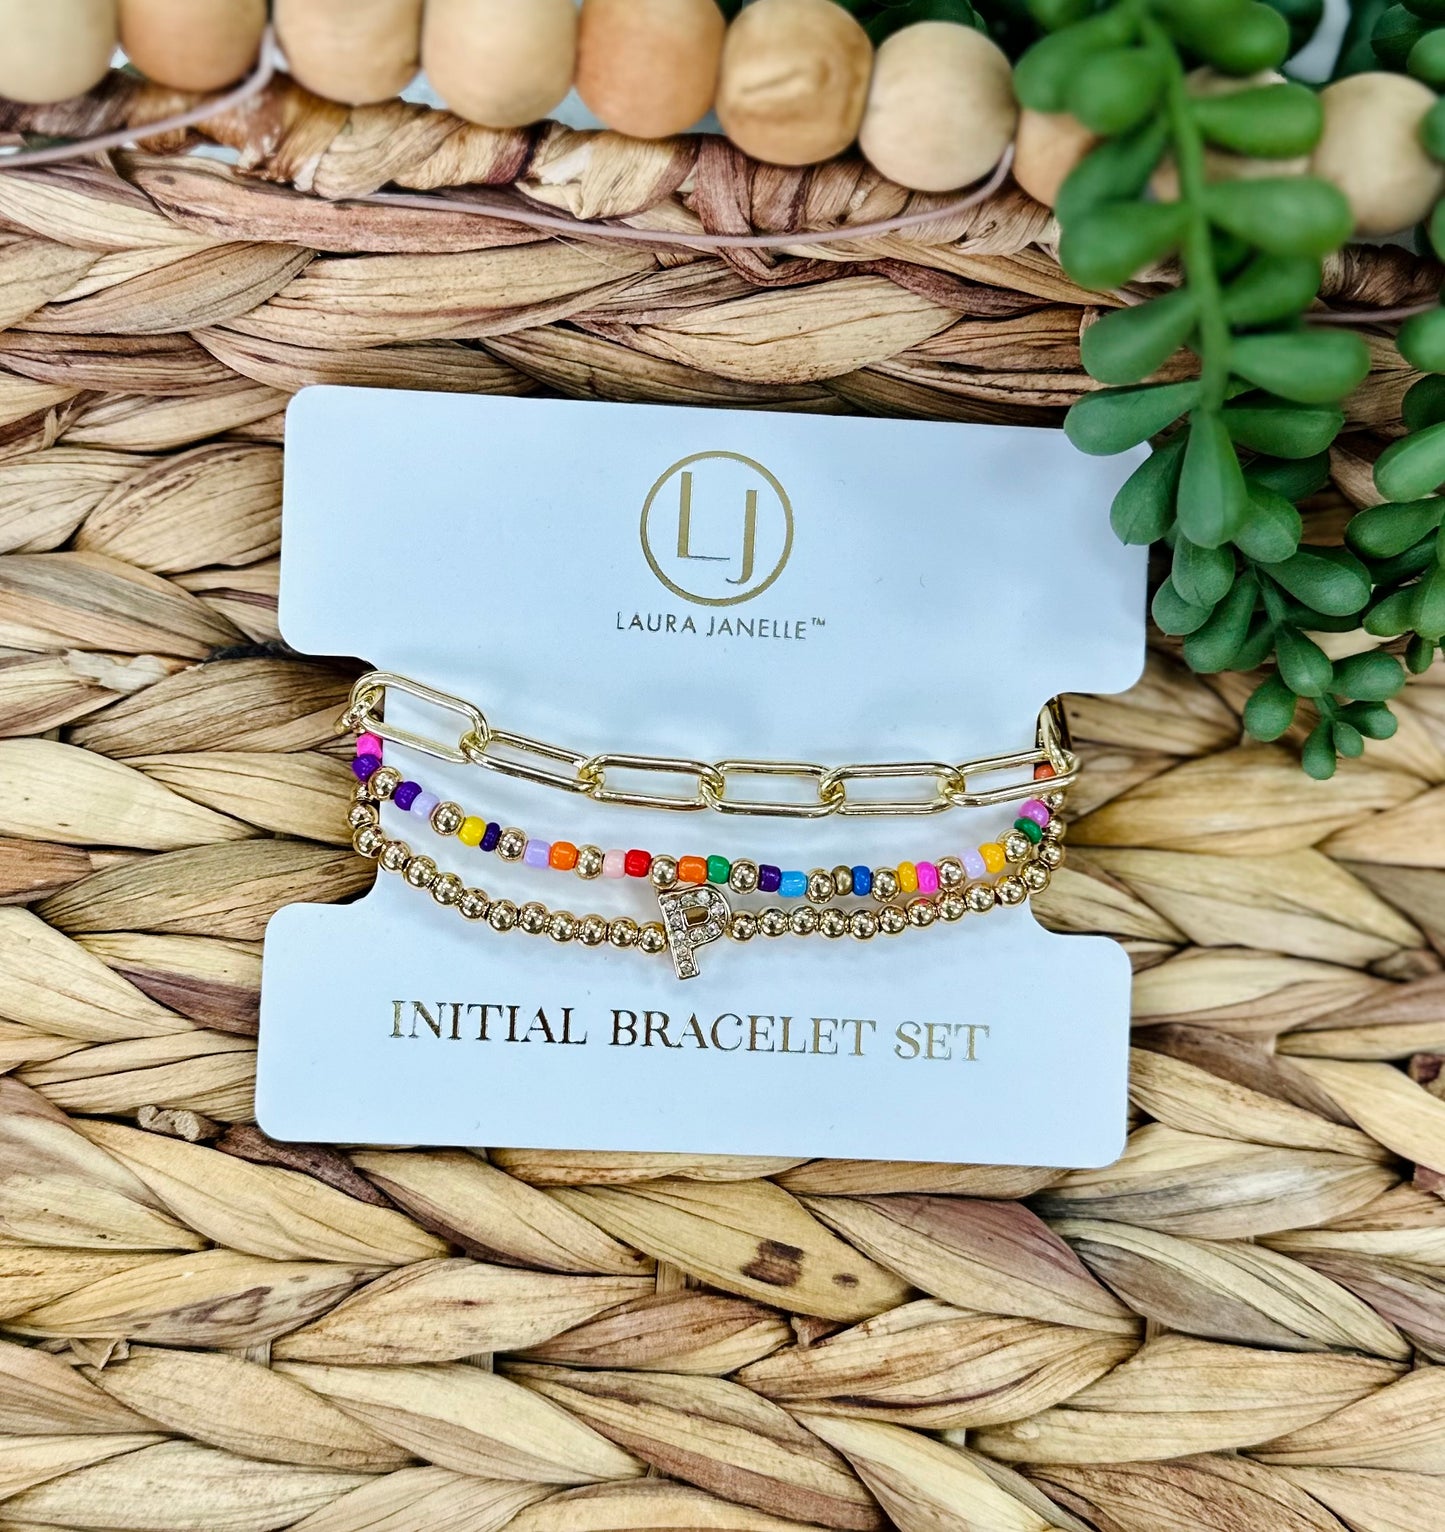 Laura Janelle Initial Bracelet Set